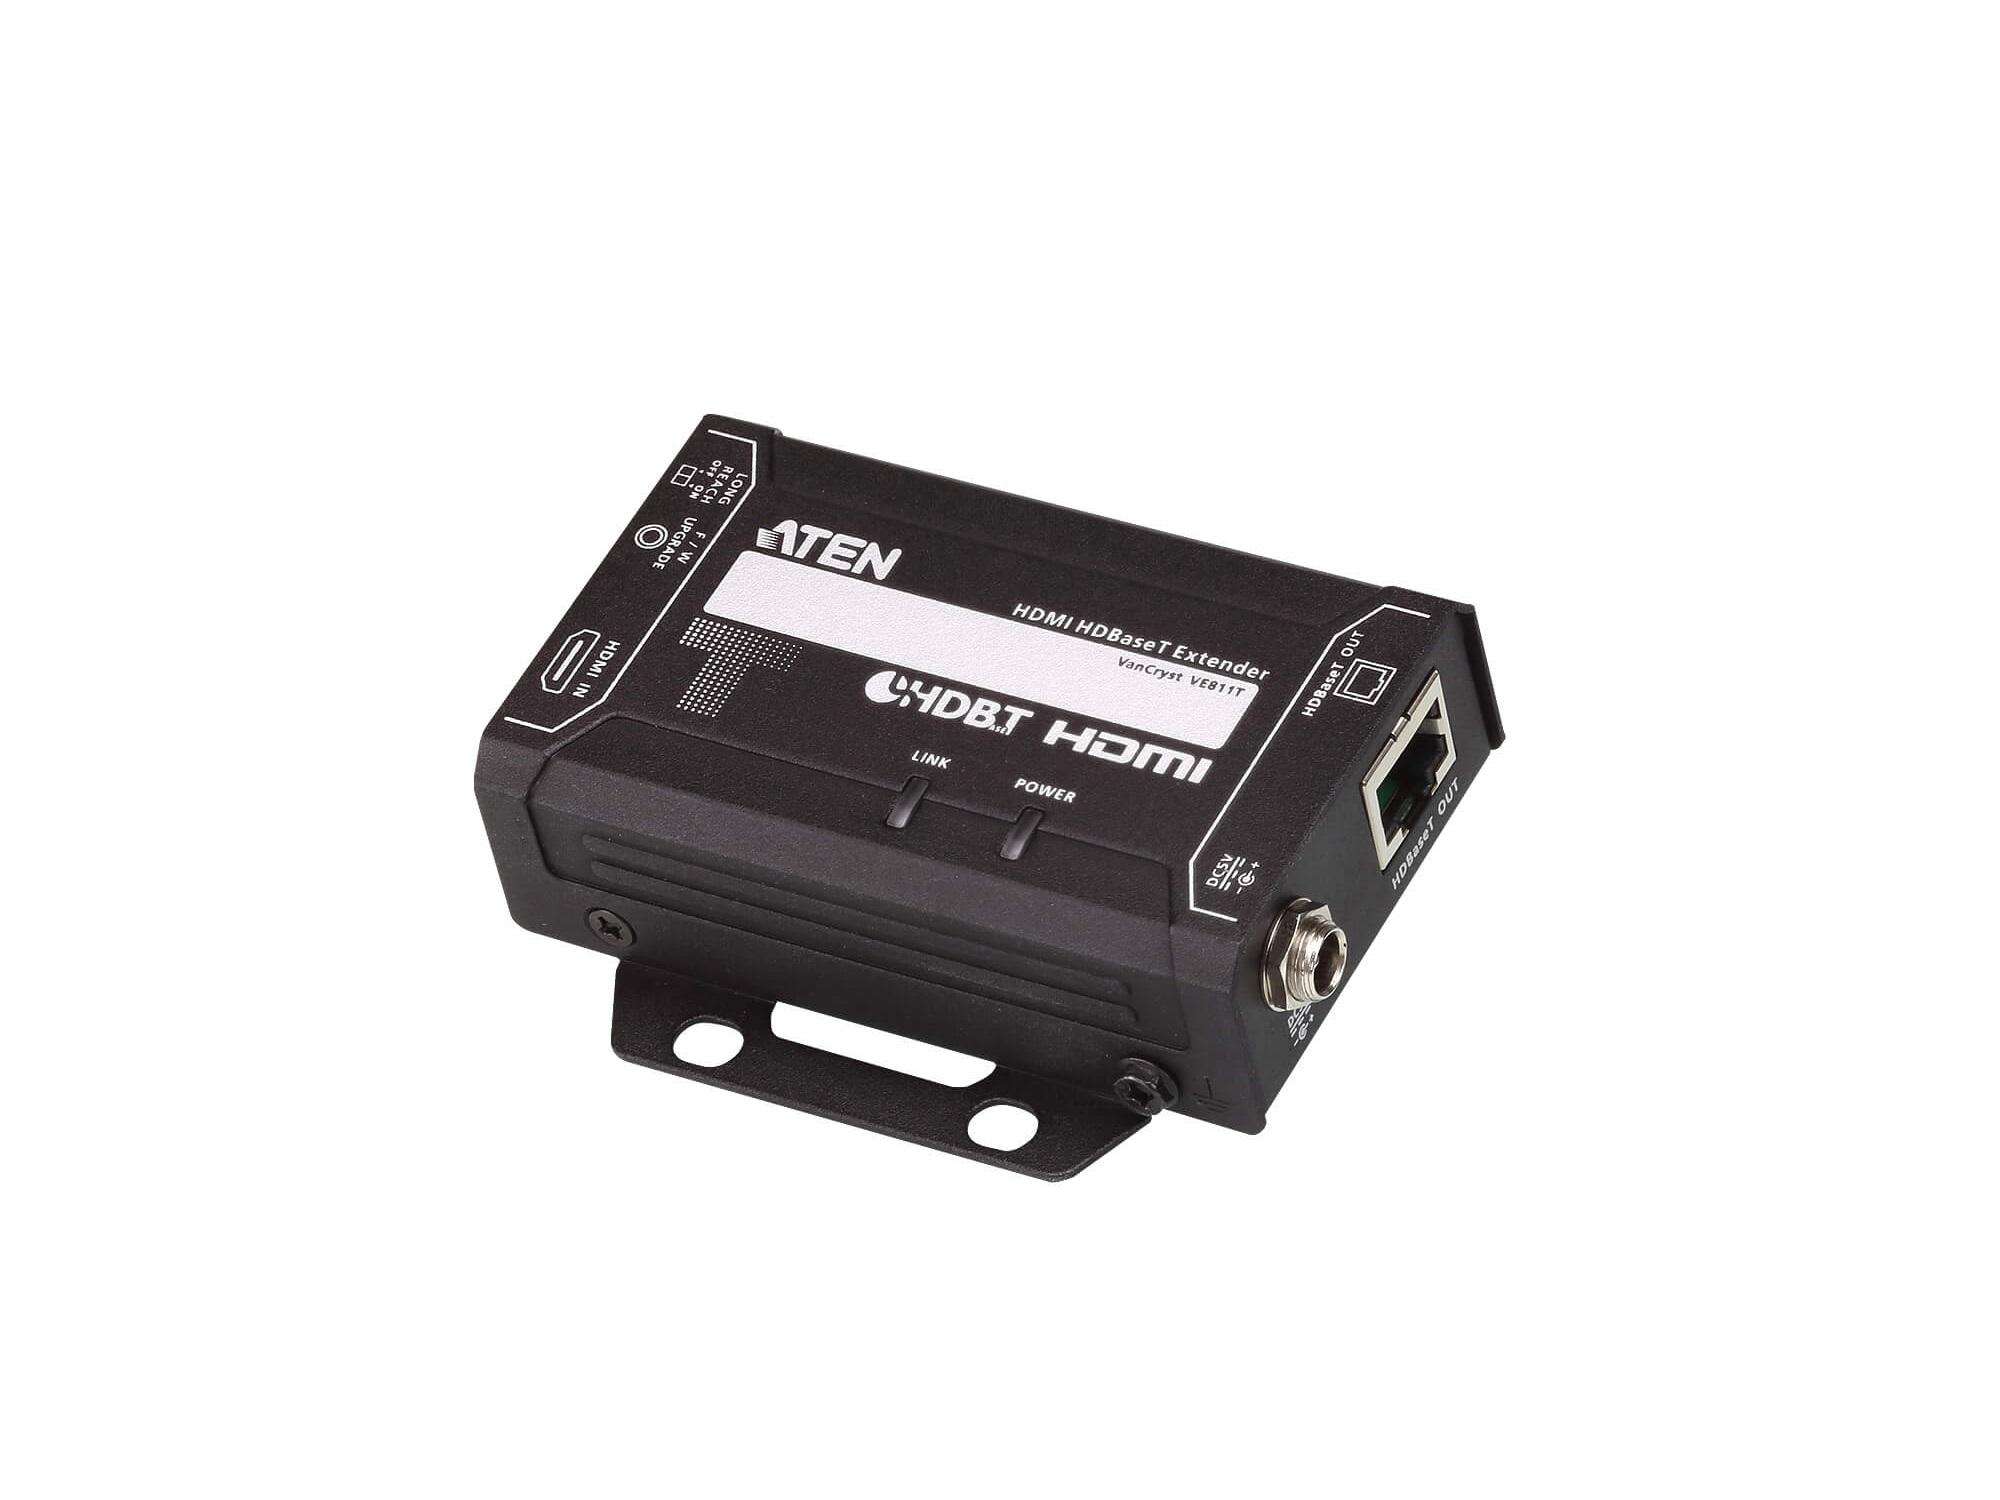 VE811 HDMI HDBaseT Extender (Receiver/Transmitter) Kit by Aten